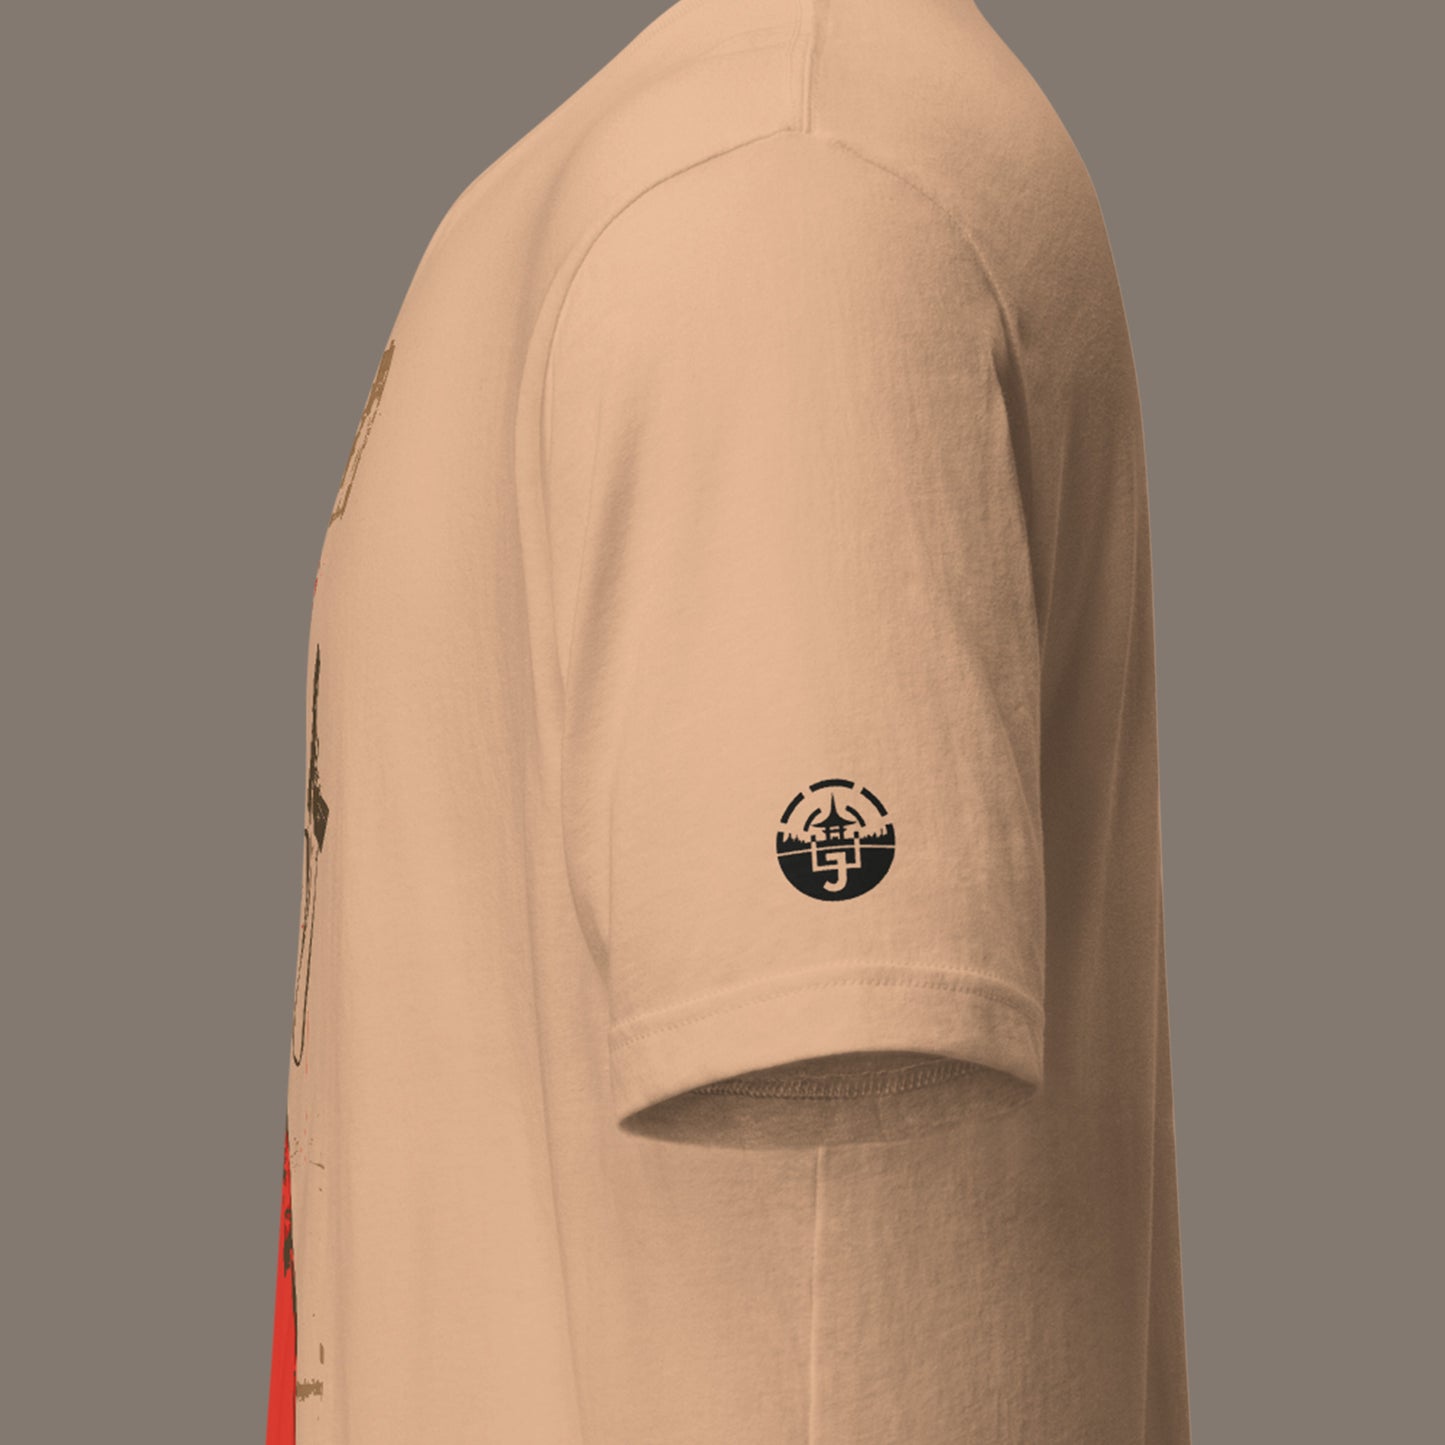 sleeve design on a Akai Hanran (Red Rebellion) Unisex t-shirt